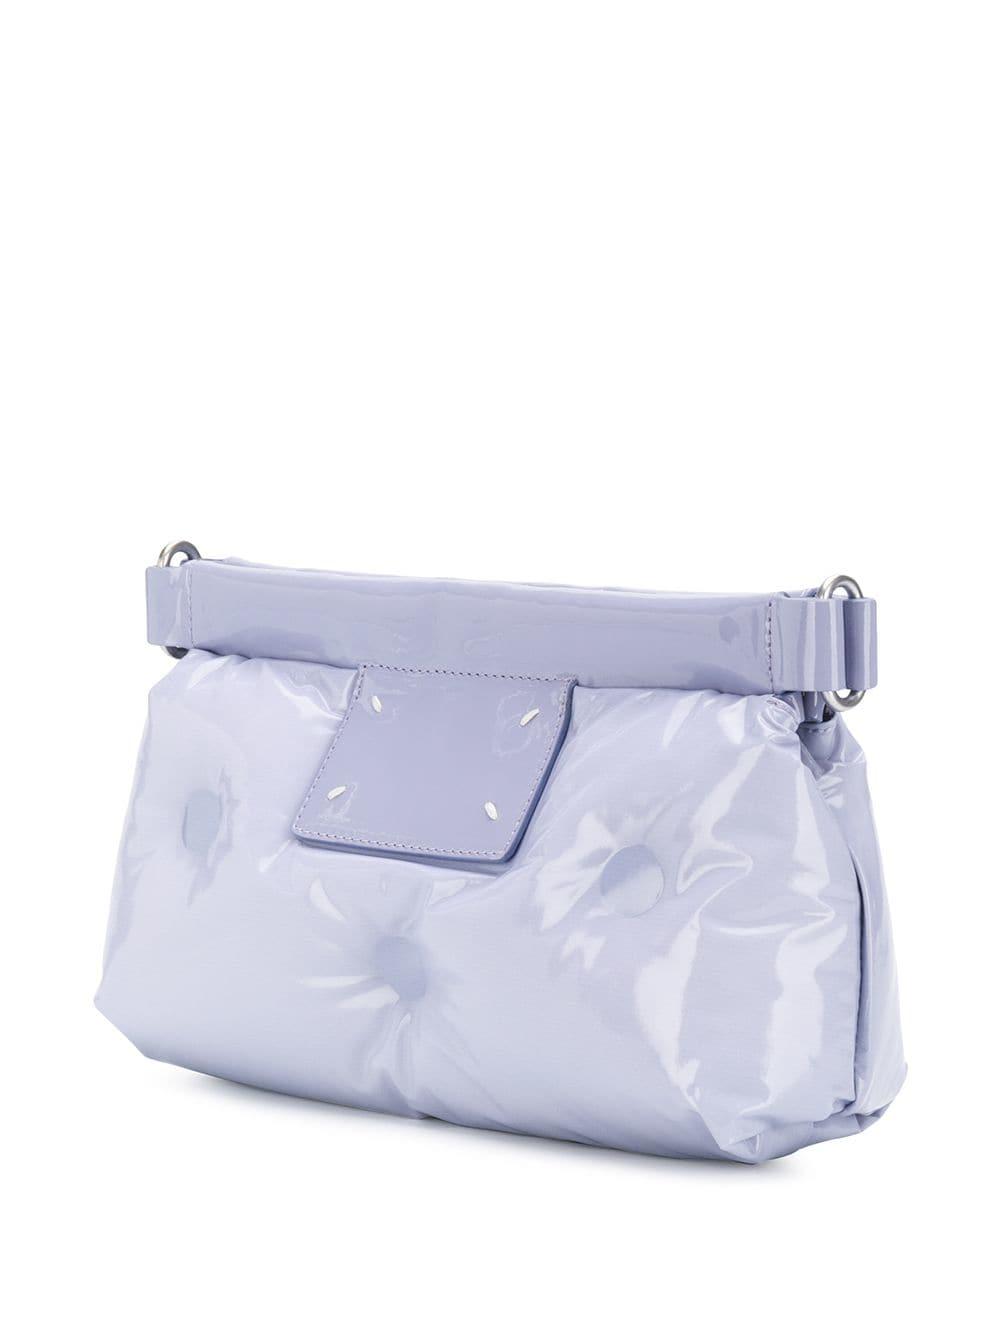 Maison Margiela Glam Slam Shoulder Bag in Purple - Lyst